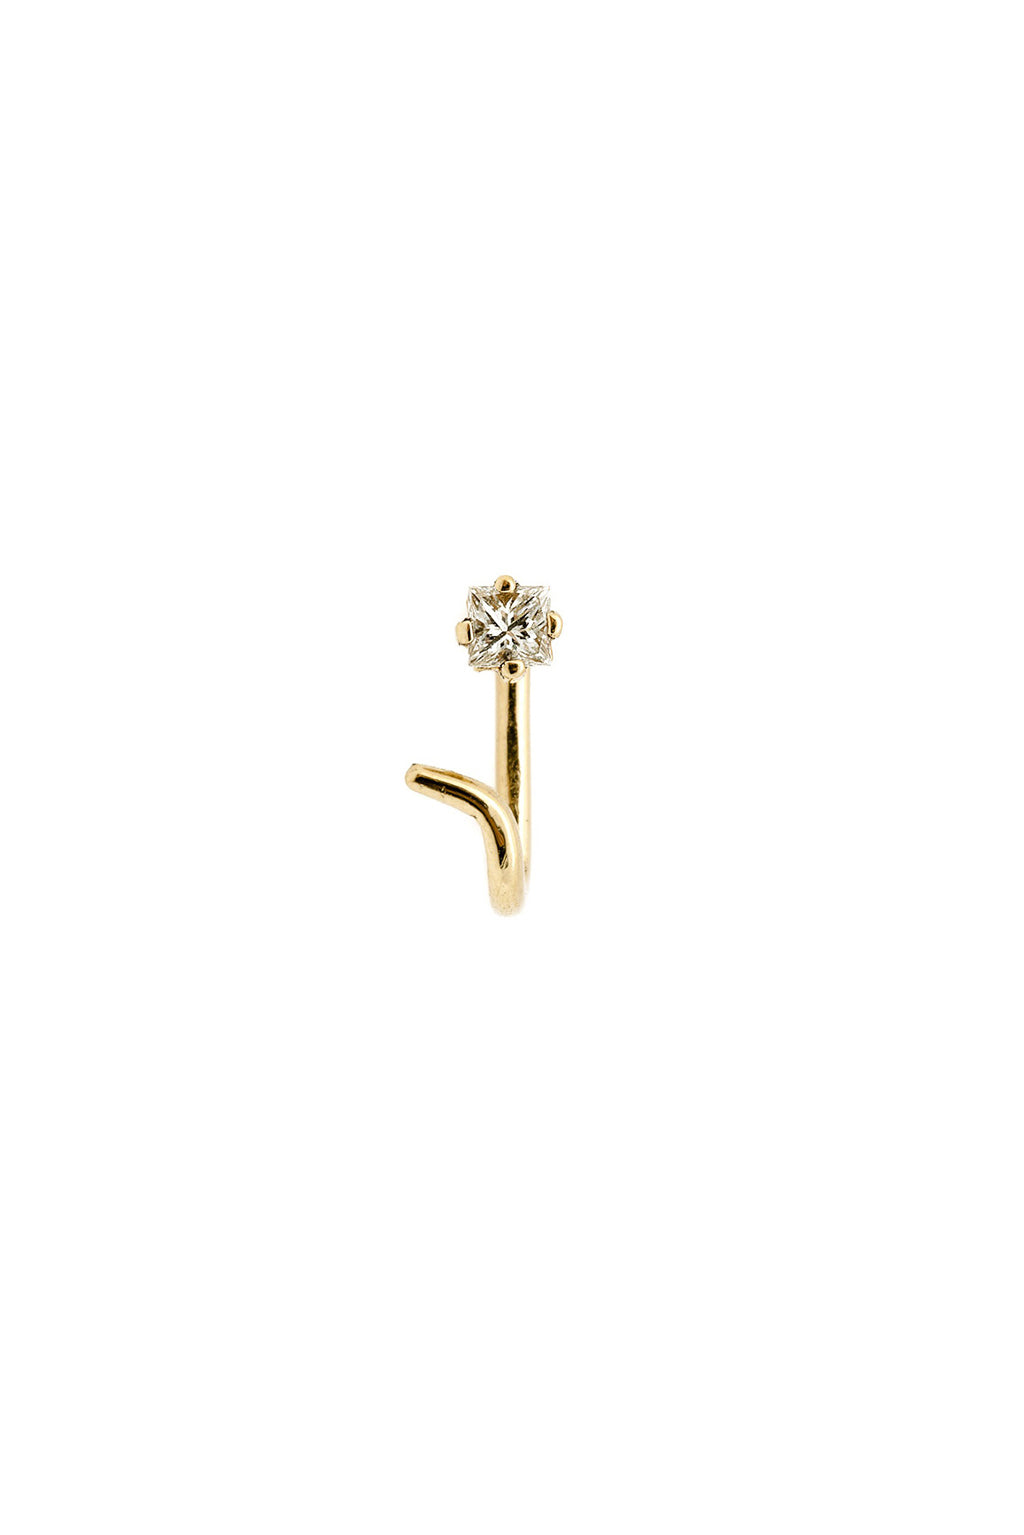 Fleur diamond gold piercing